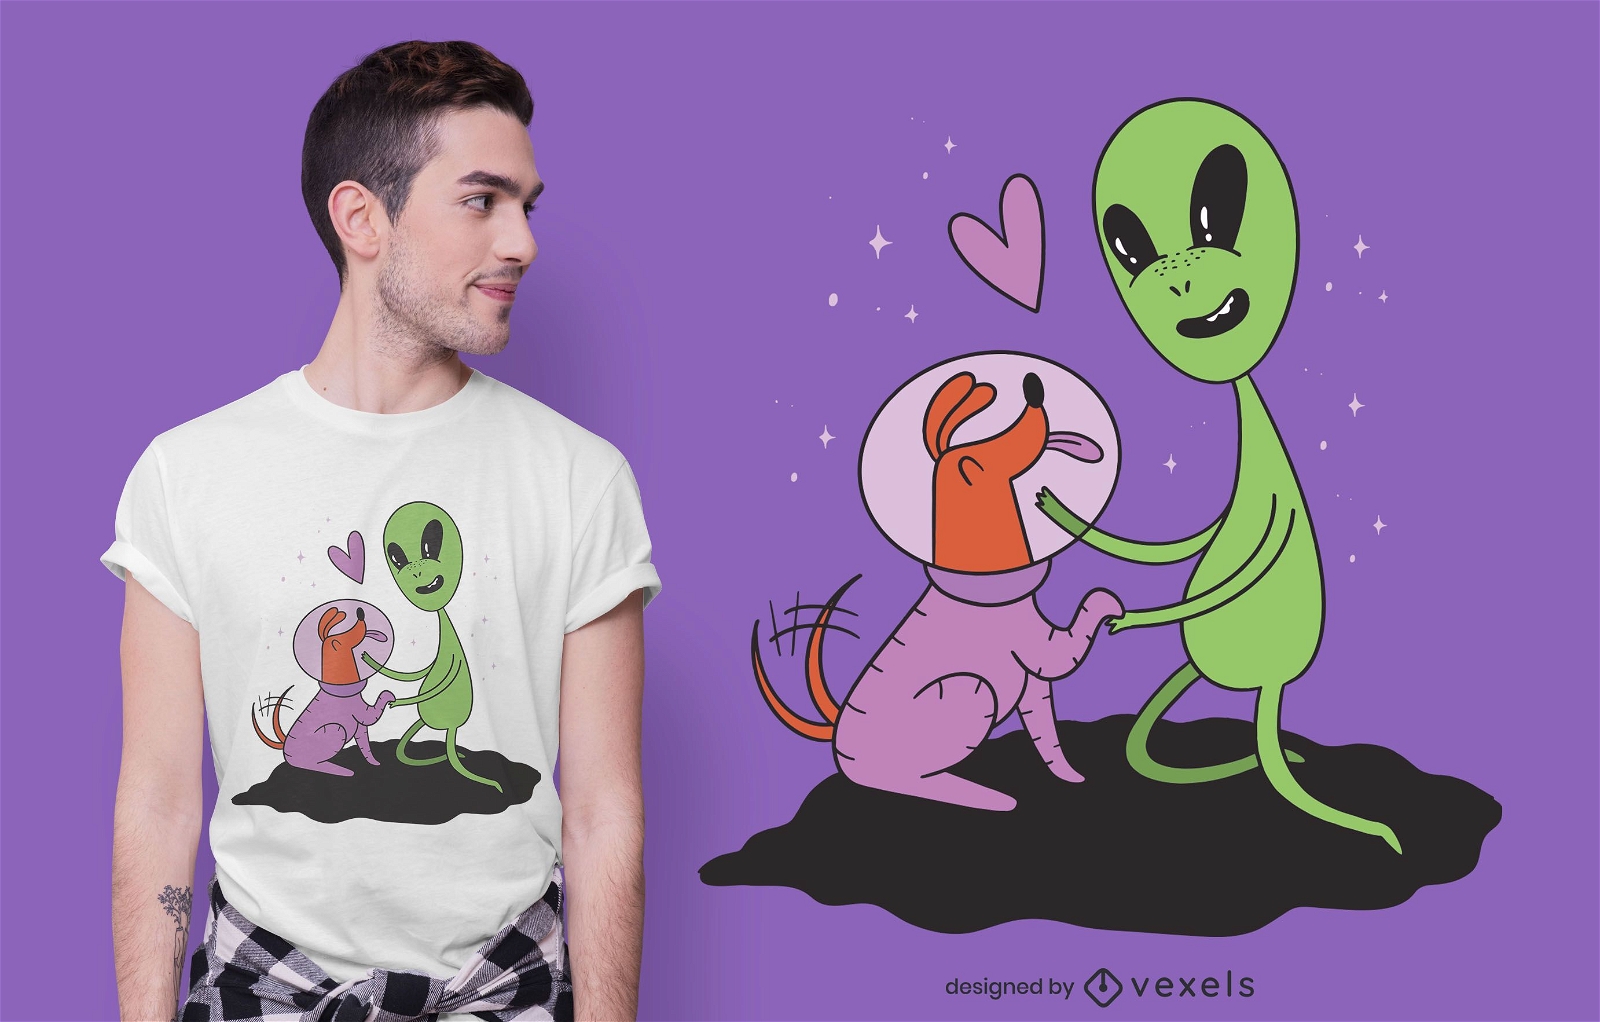 Dise?o de camiseta de perro alien?gena